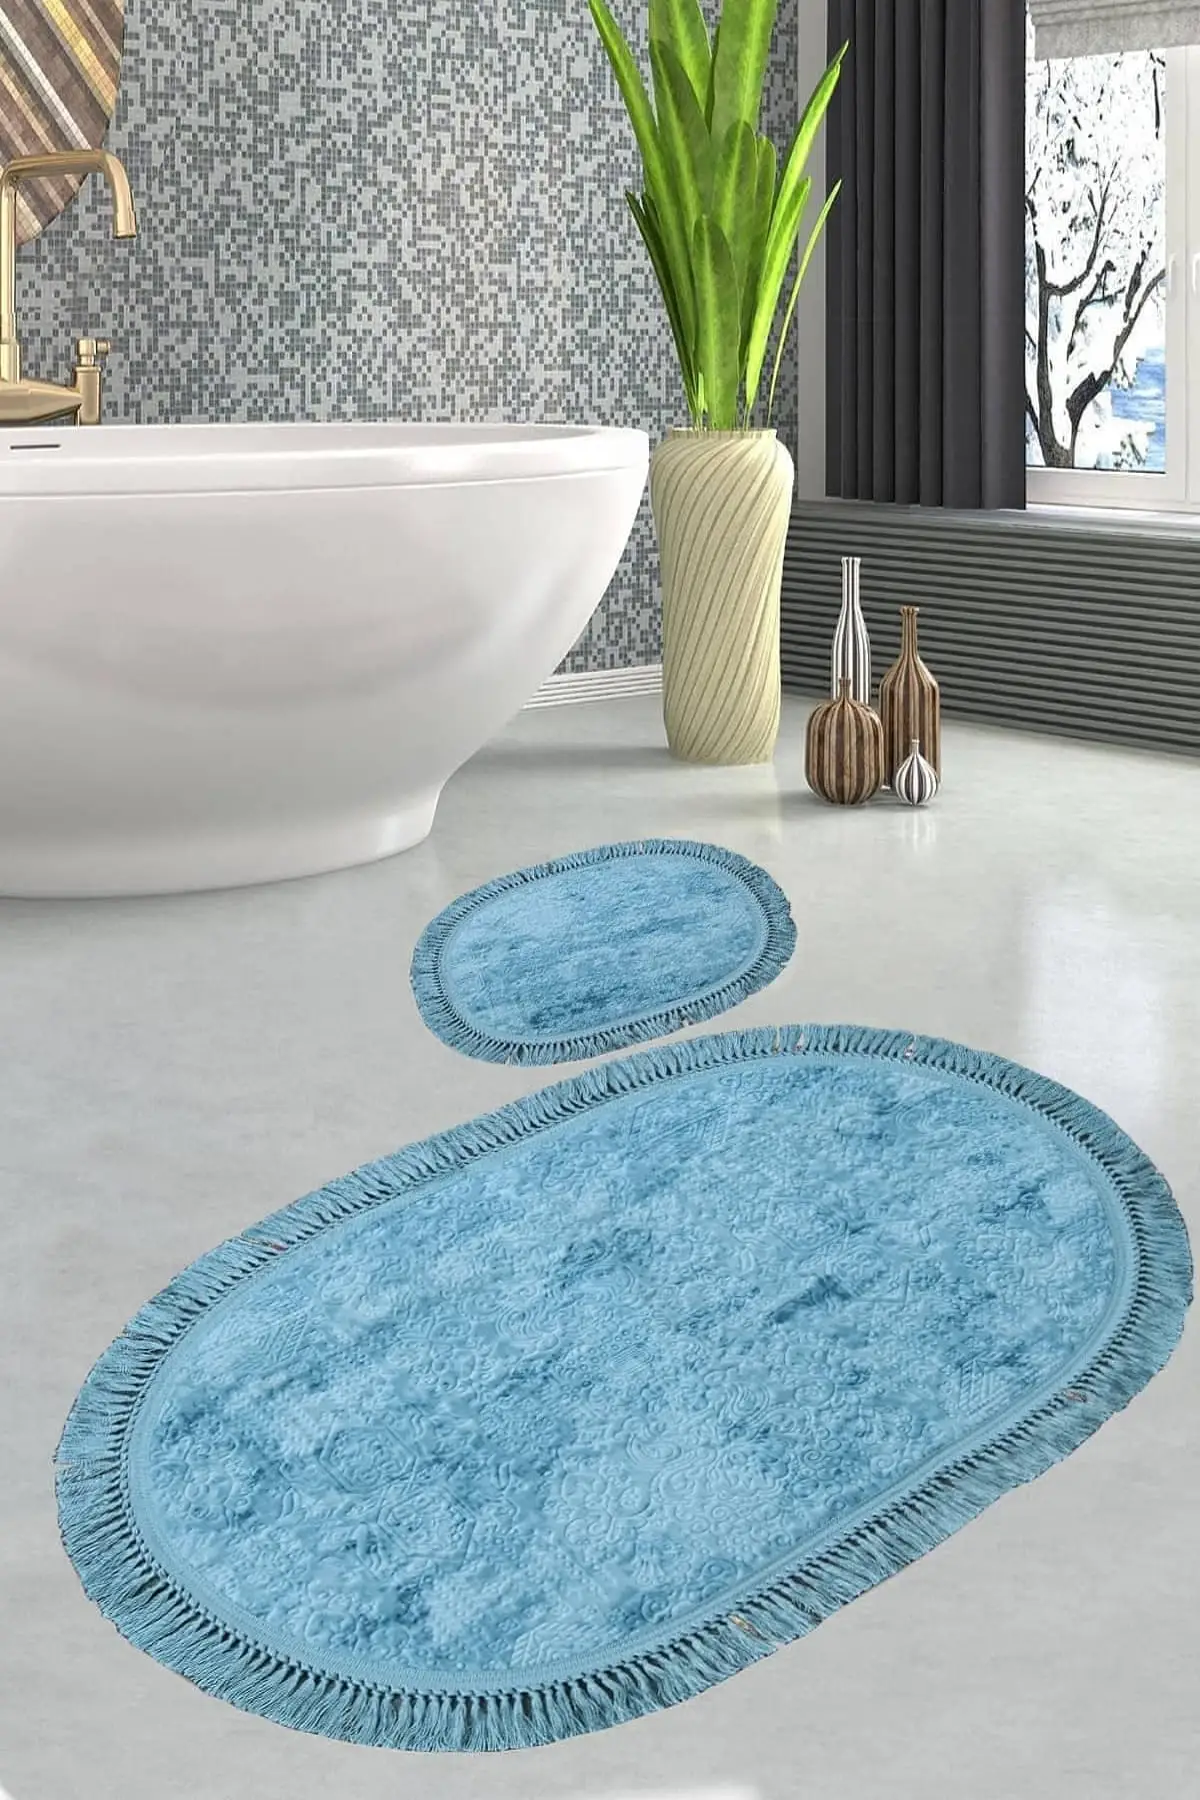 Bath Mat Doormat Cotton Non-Slip Base Oval Fringed 2 Li Toilet Seat Pad (Turquoise, 60x100cm) 2'li (60 X100)+(50 X60)